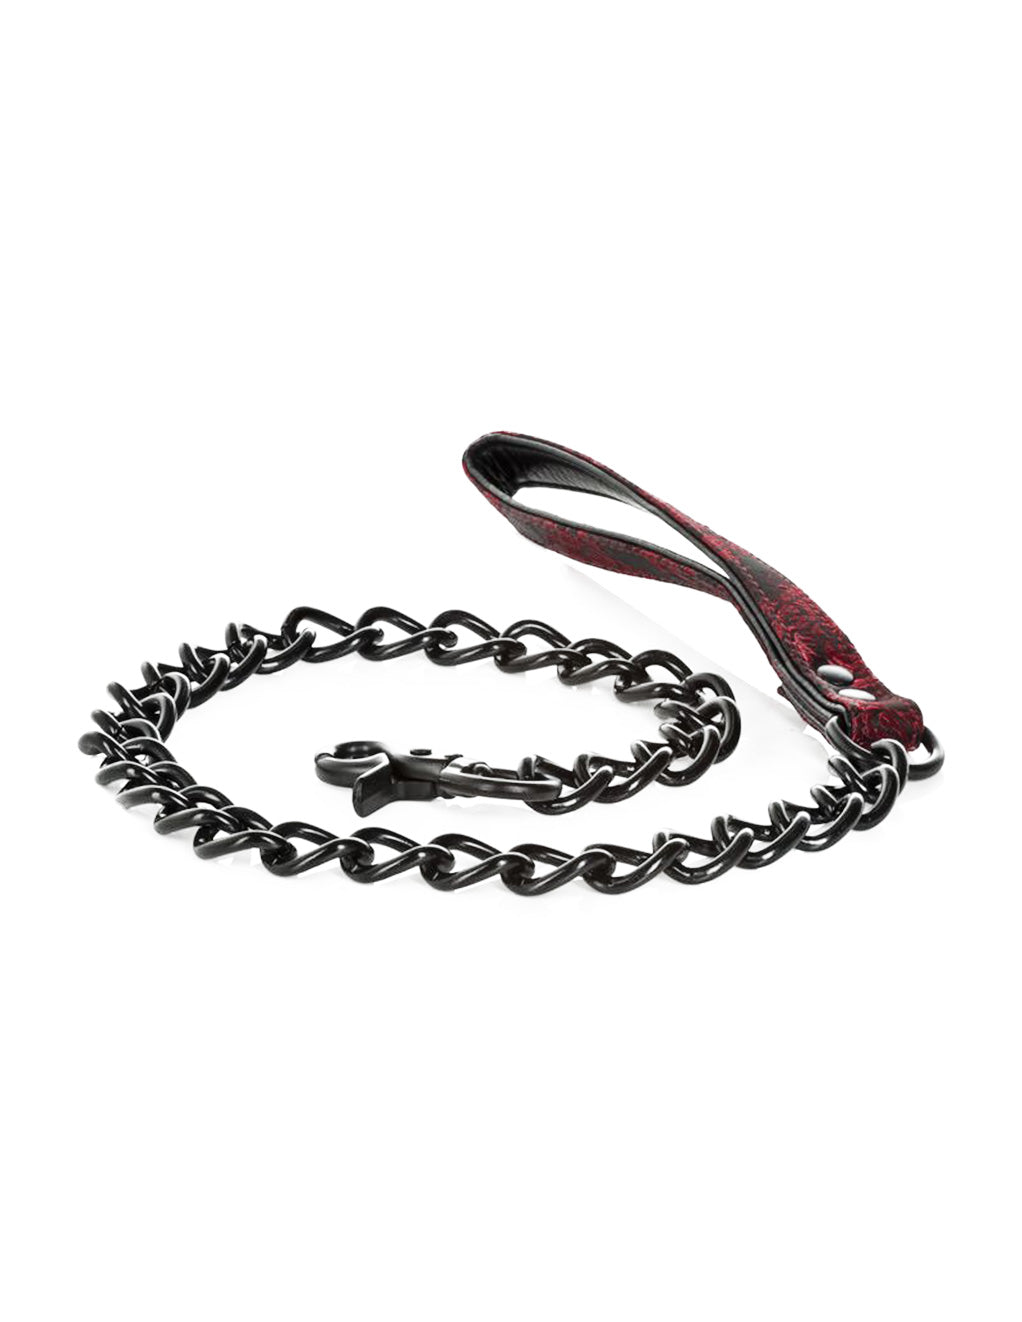 Scandal Metal Chain Leash - Fetish BDSM - Collar Leash